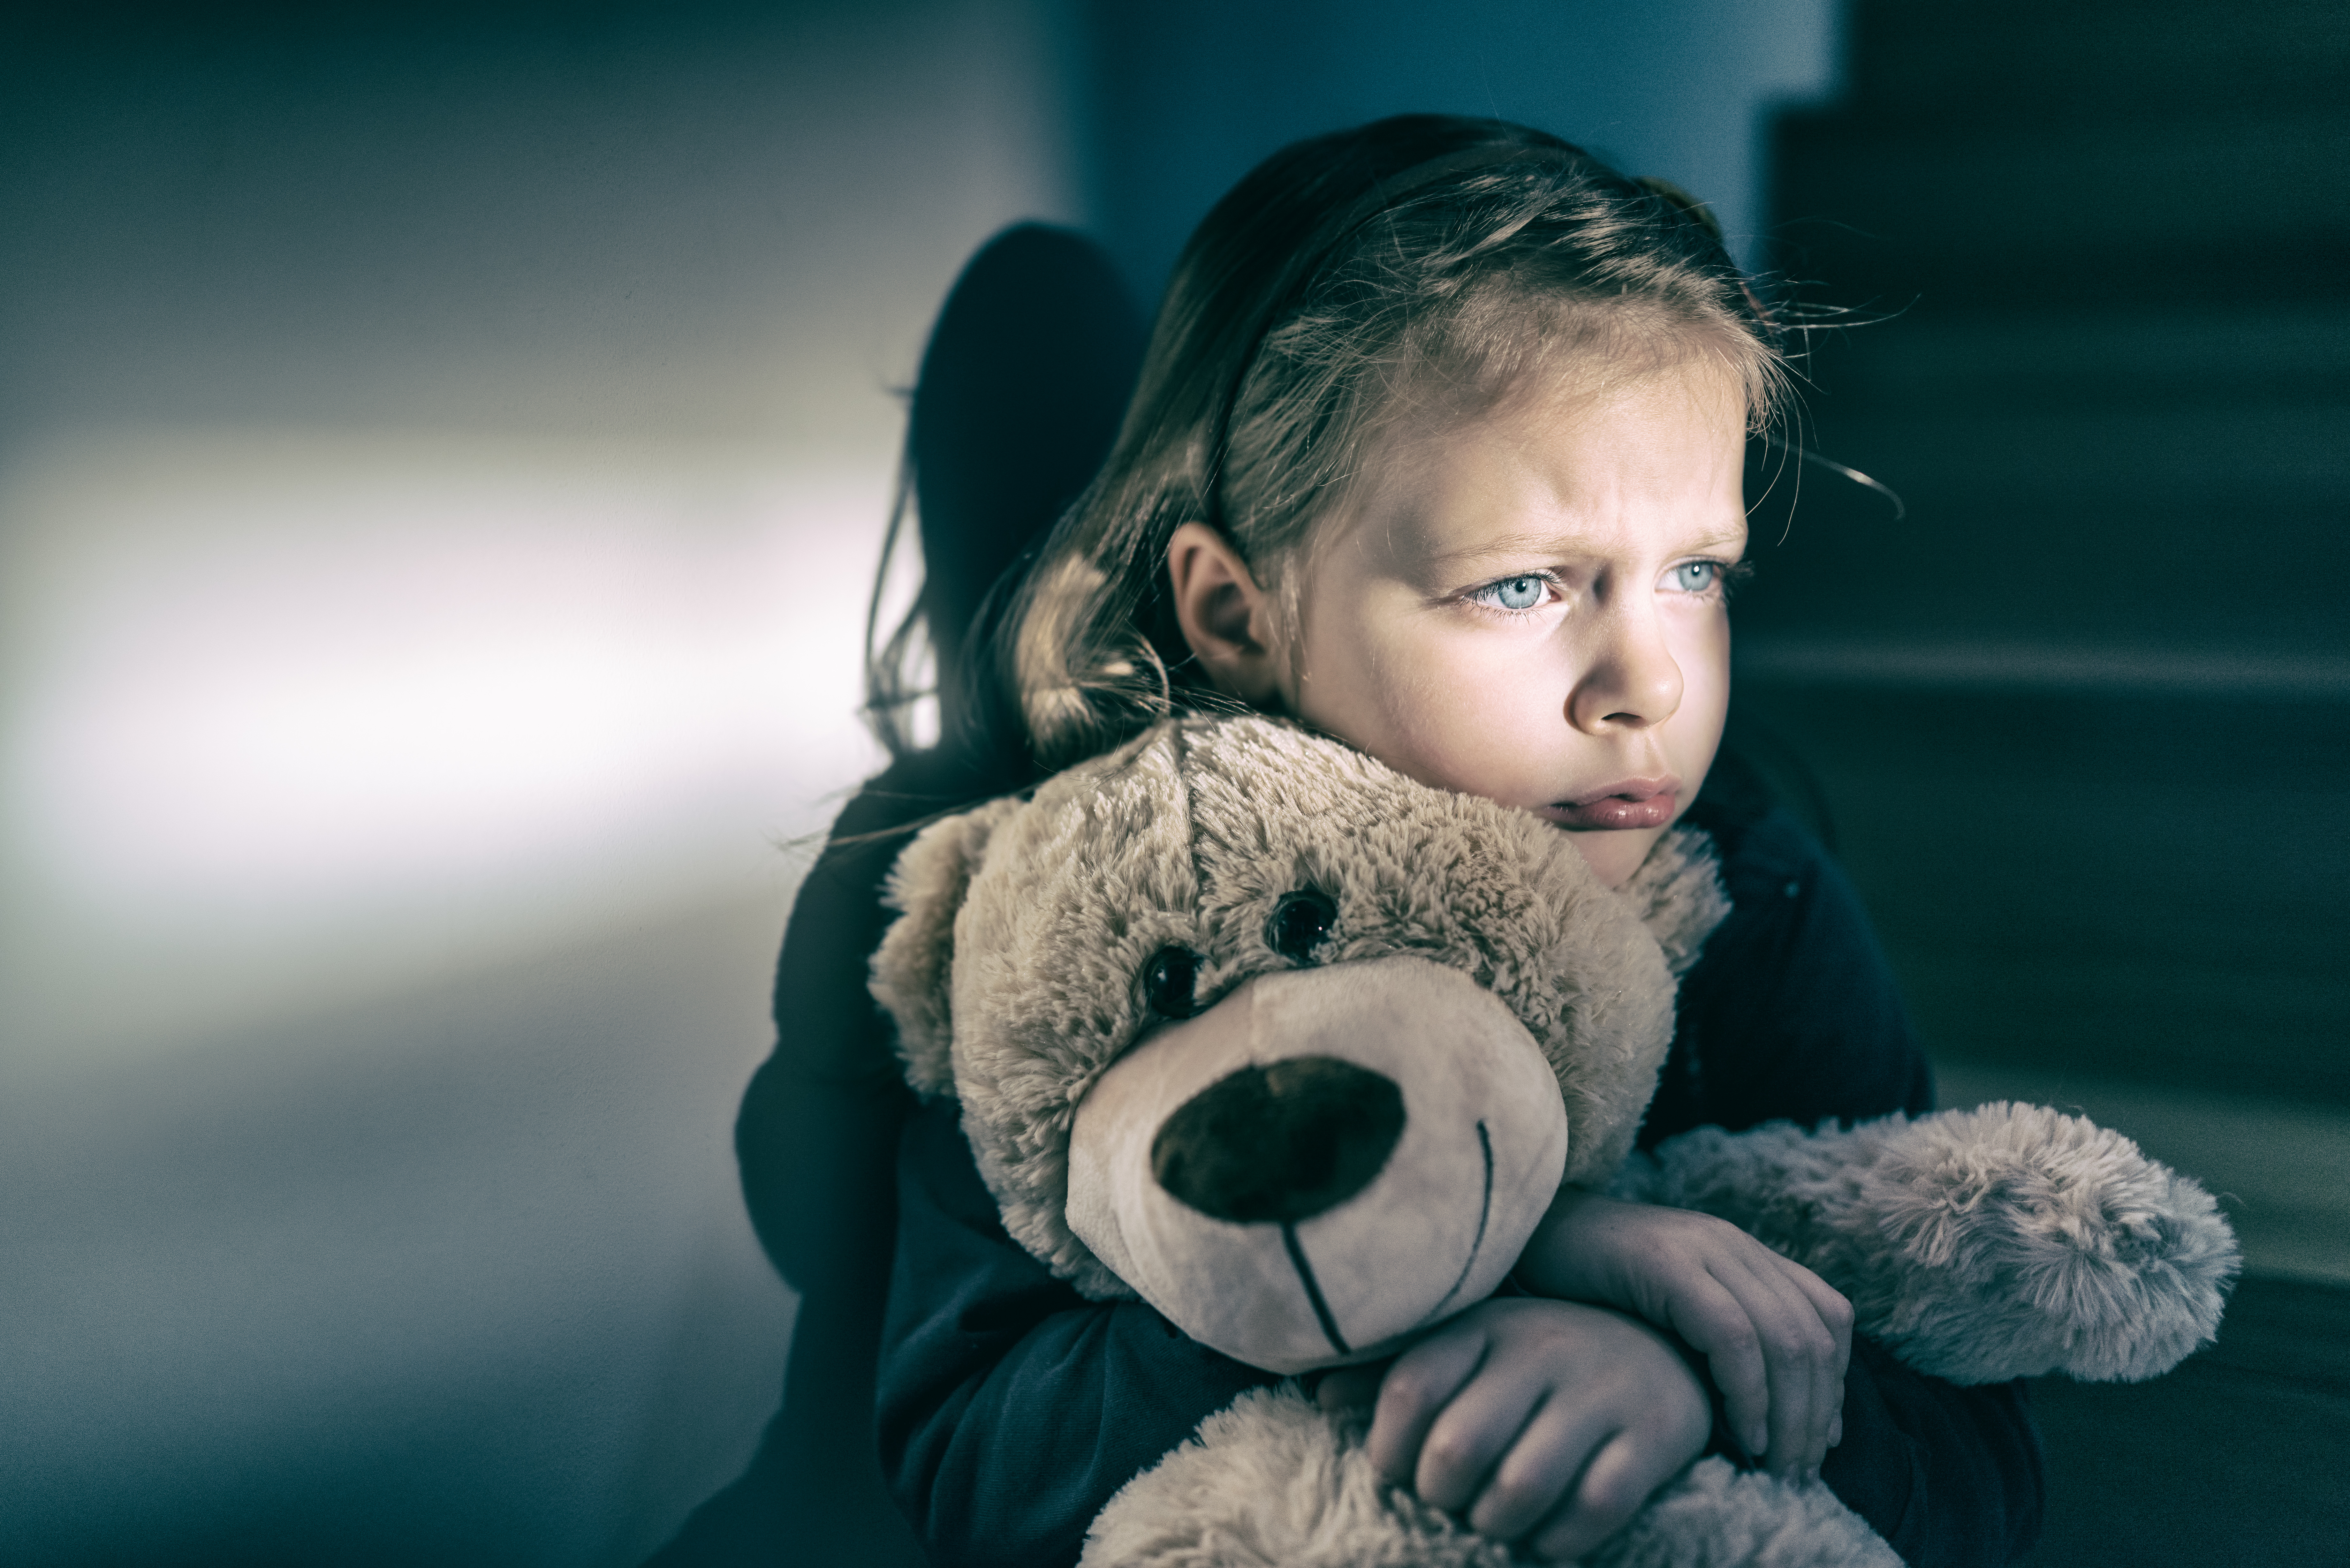 Little girl holding a teddy bear | Source: Shutterstock